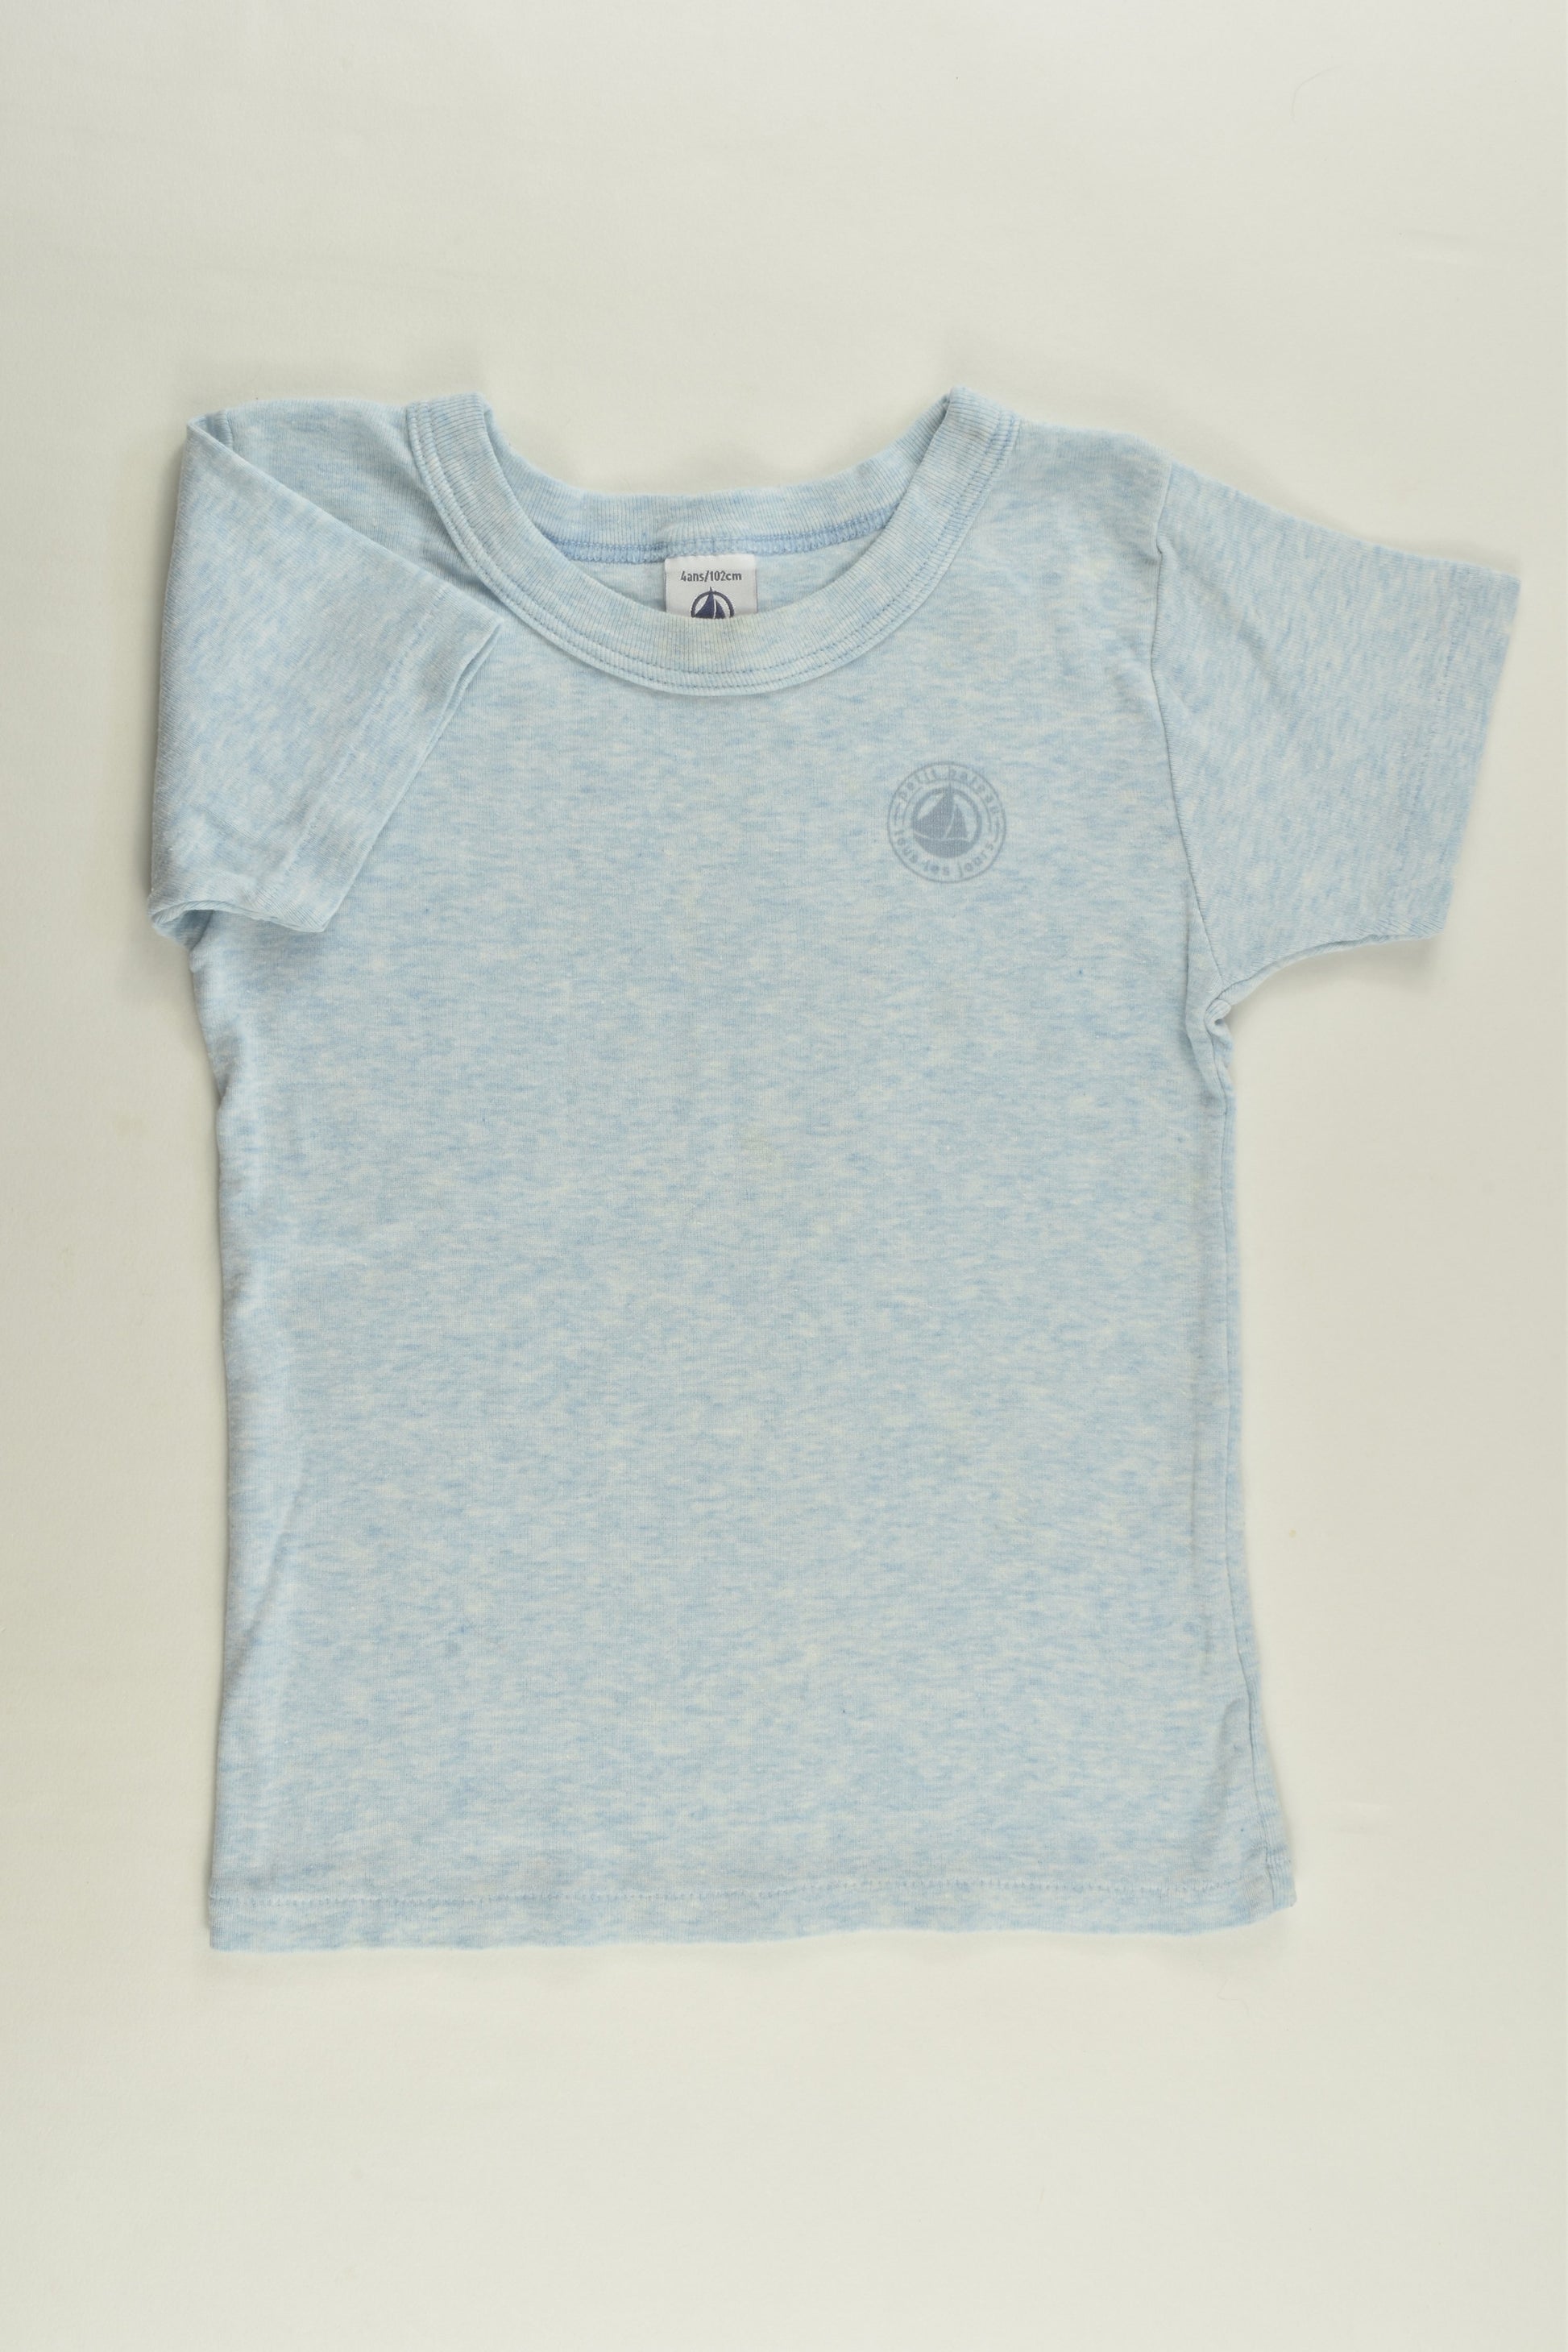 Petit Bateau Size 3-4 (4 years, 102 cm) T-shirt